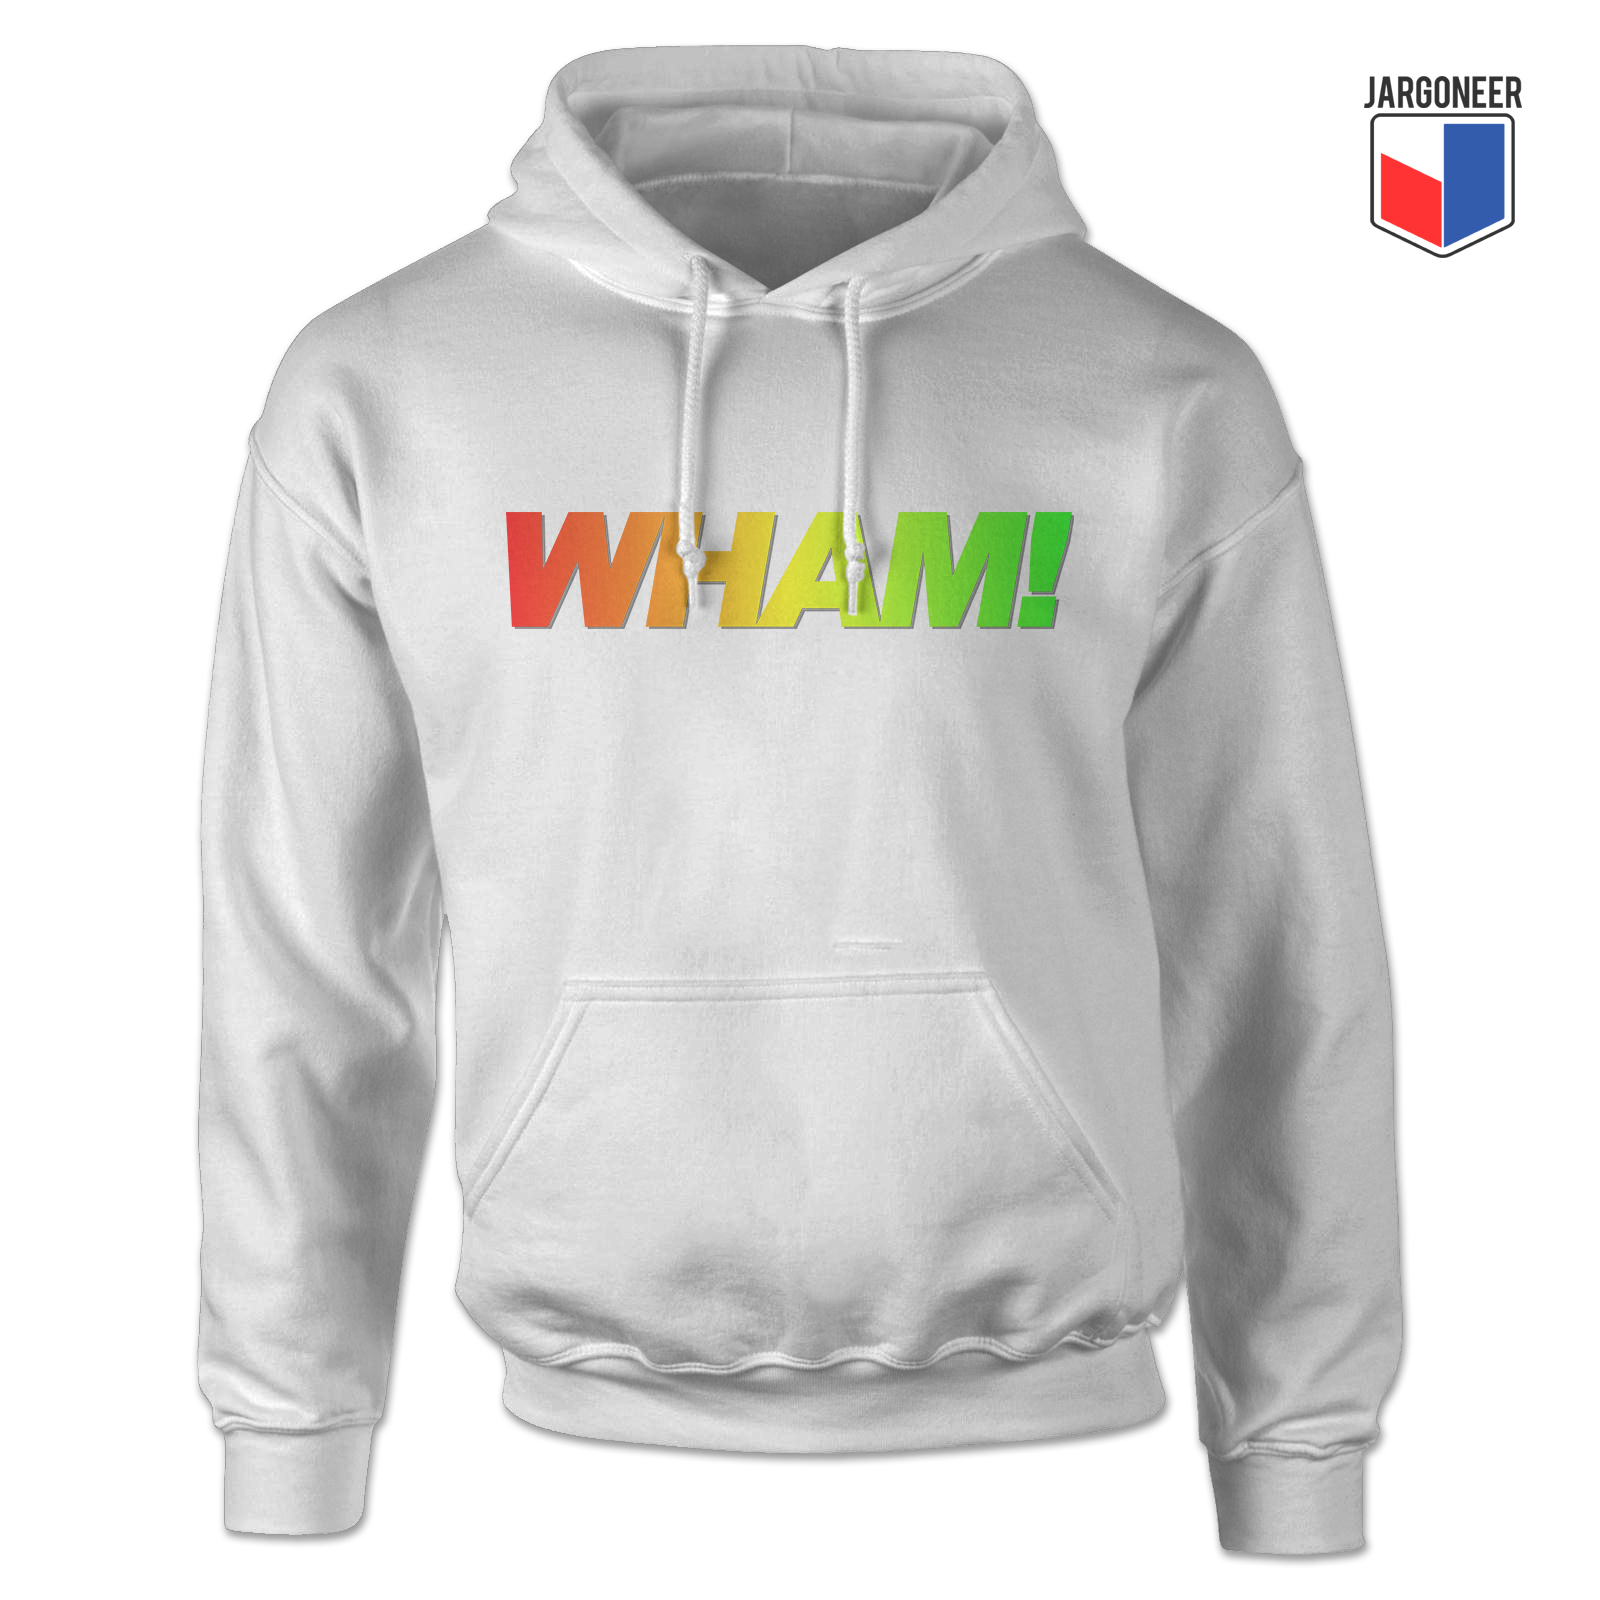 Wham White Hoody - Shop Unique Graphic Cool Shirt Designs